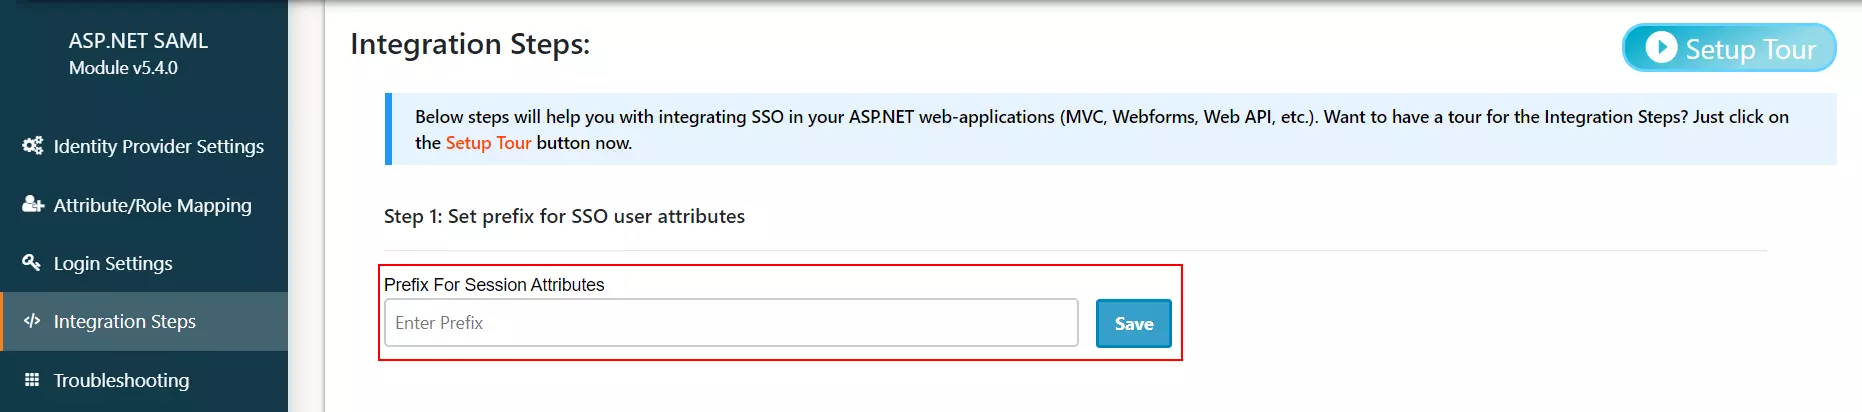 ASP.NET SAML Single Sign-On (SSO) using Google Apps as IDP - Prefix SSO Attributes